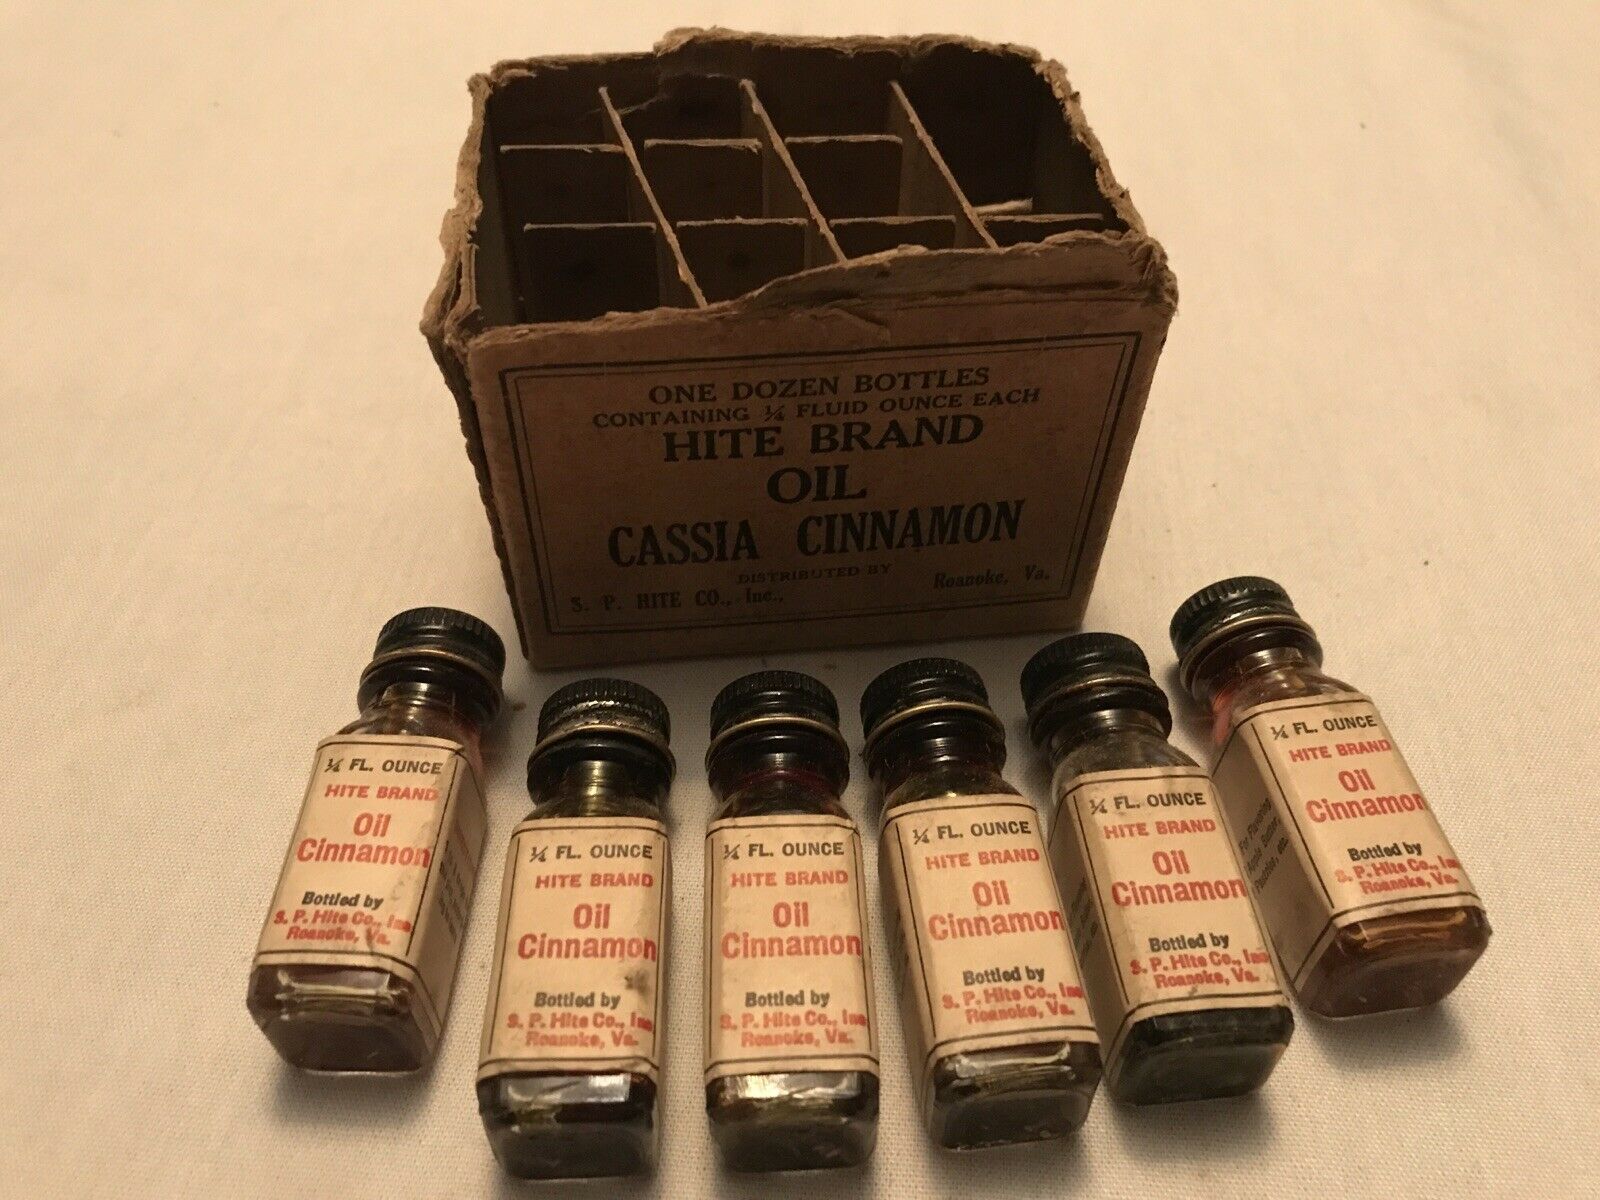 6 Original Vintage Hite Brand Oil Cassia Cinnamon Full Bottles In Original Box